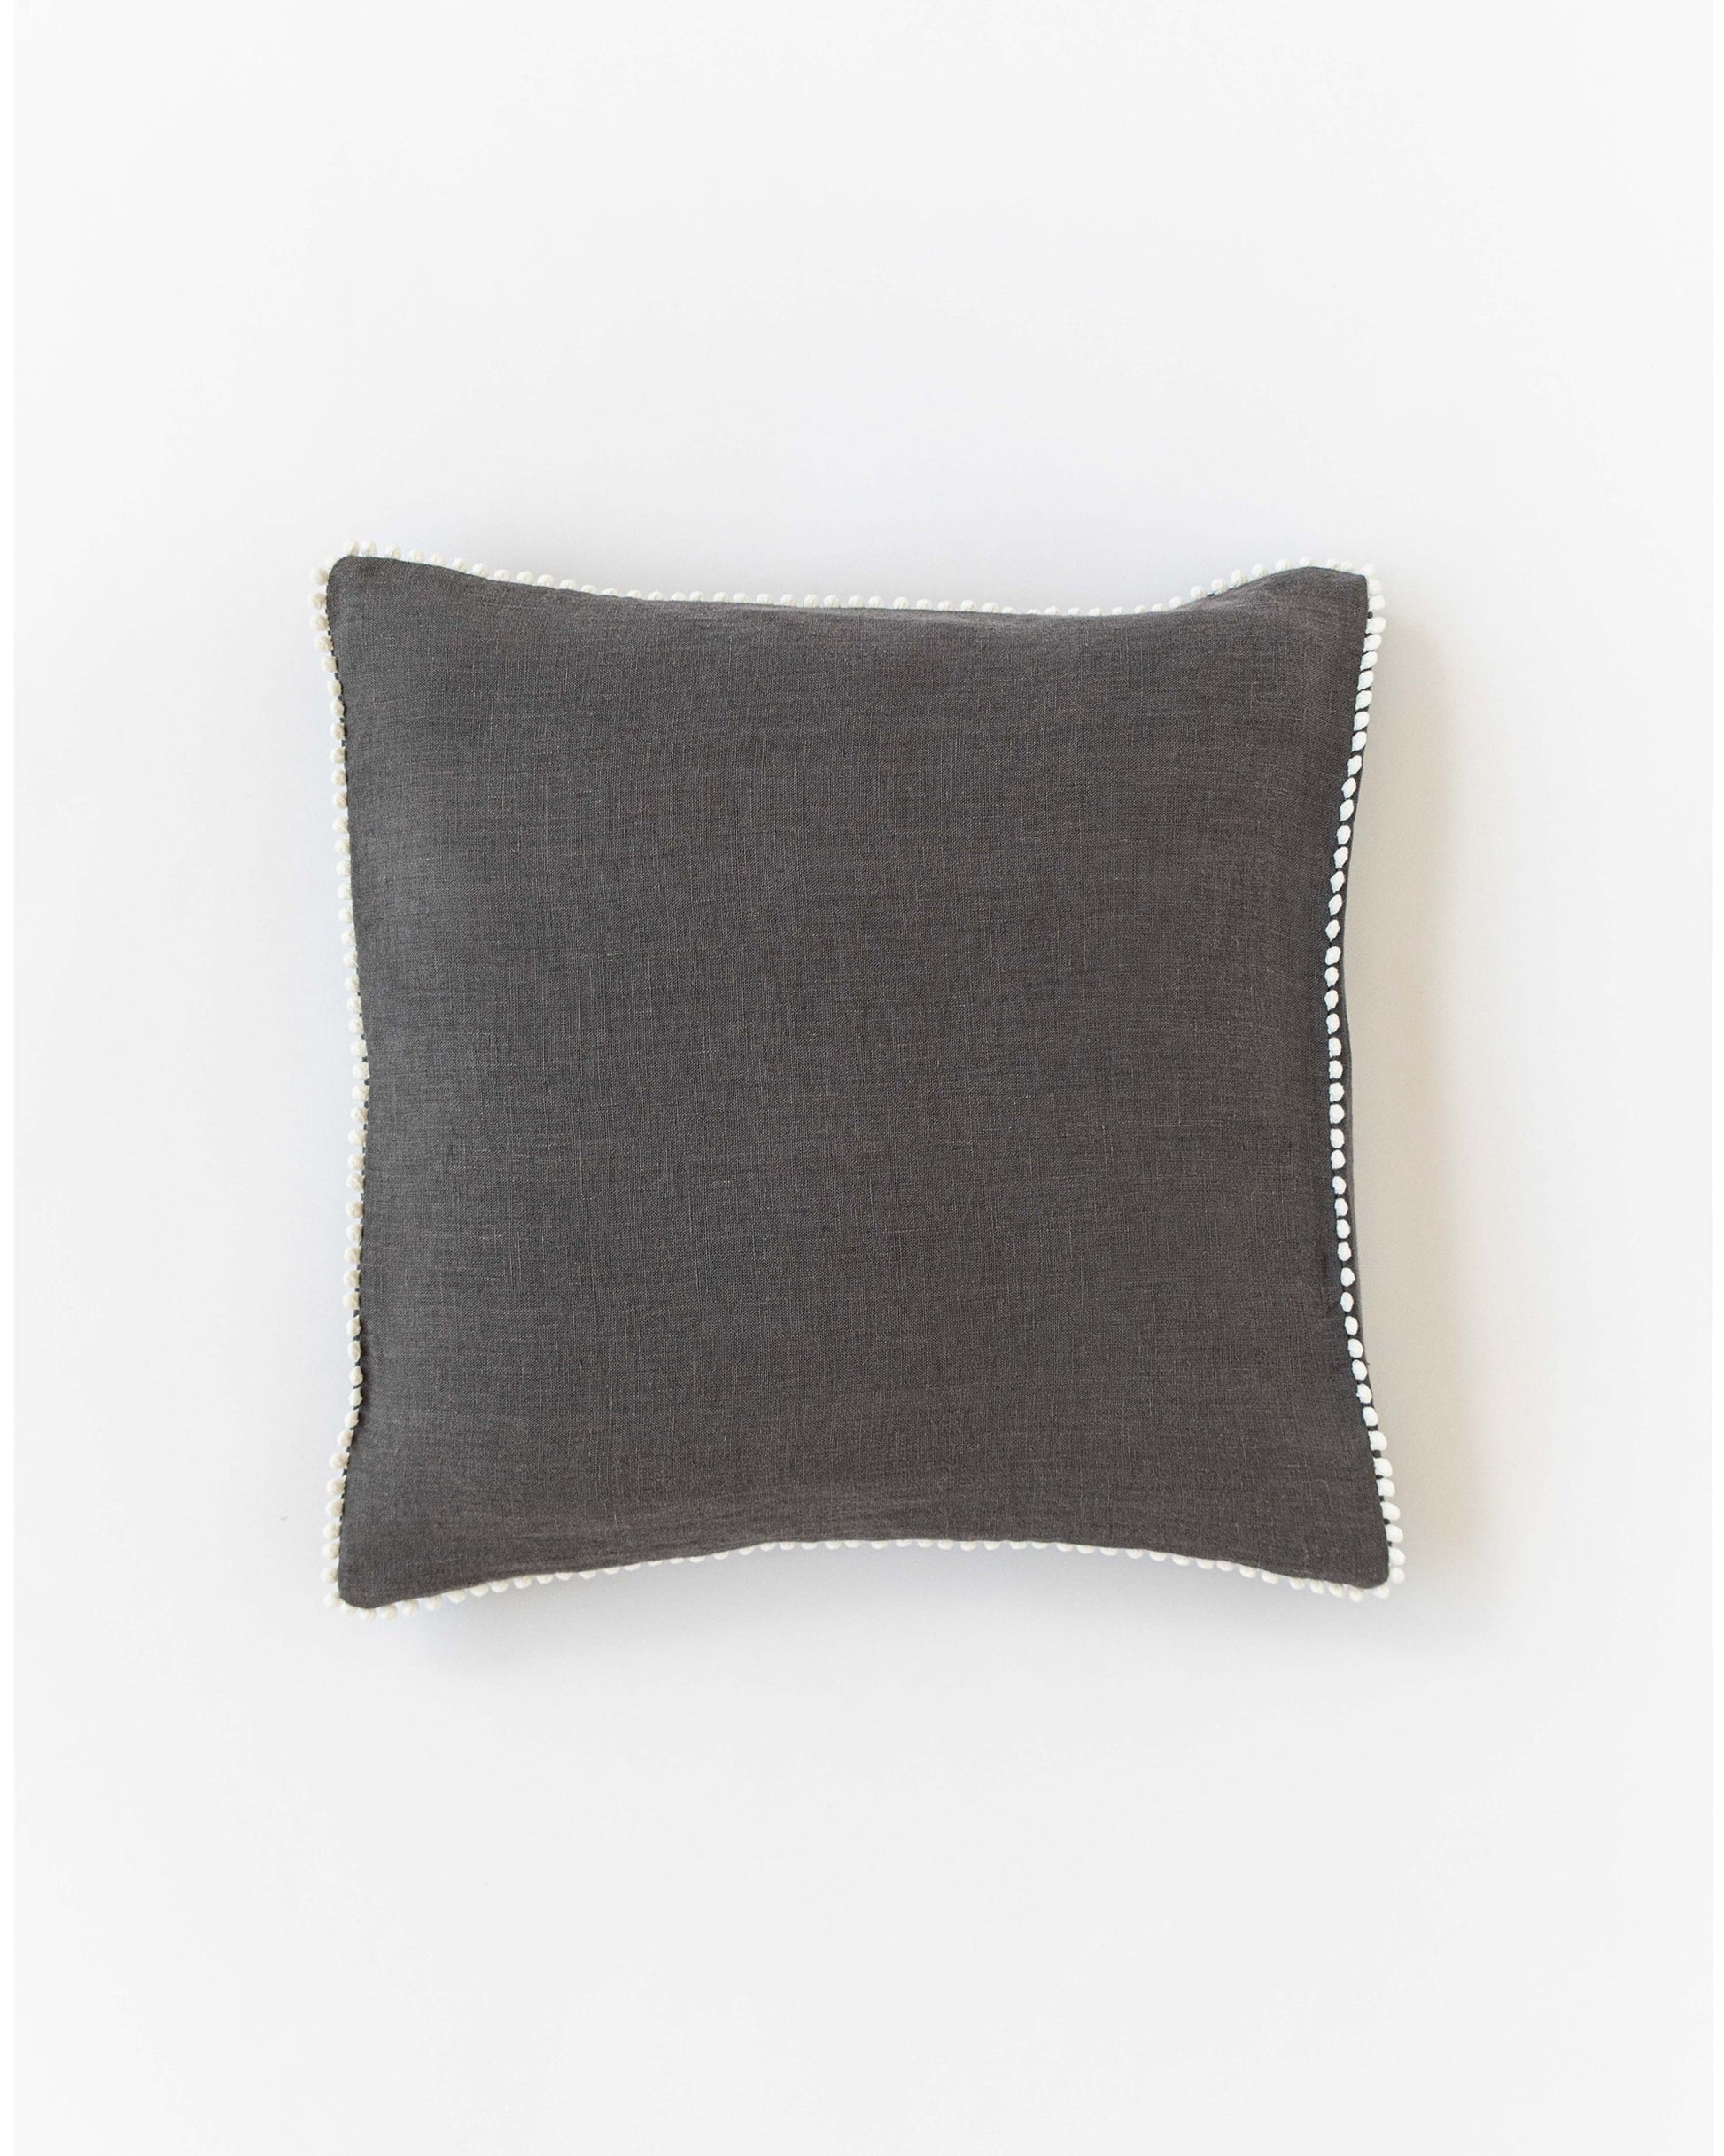 Pom pom trim linen pillowcase in Charcoal gray - MagicLinen